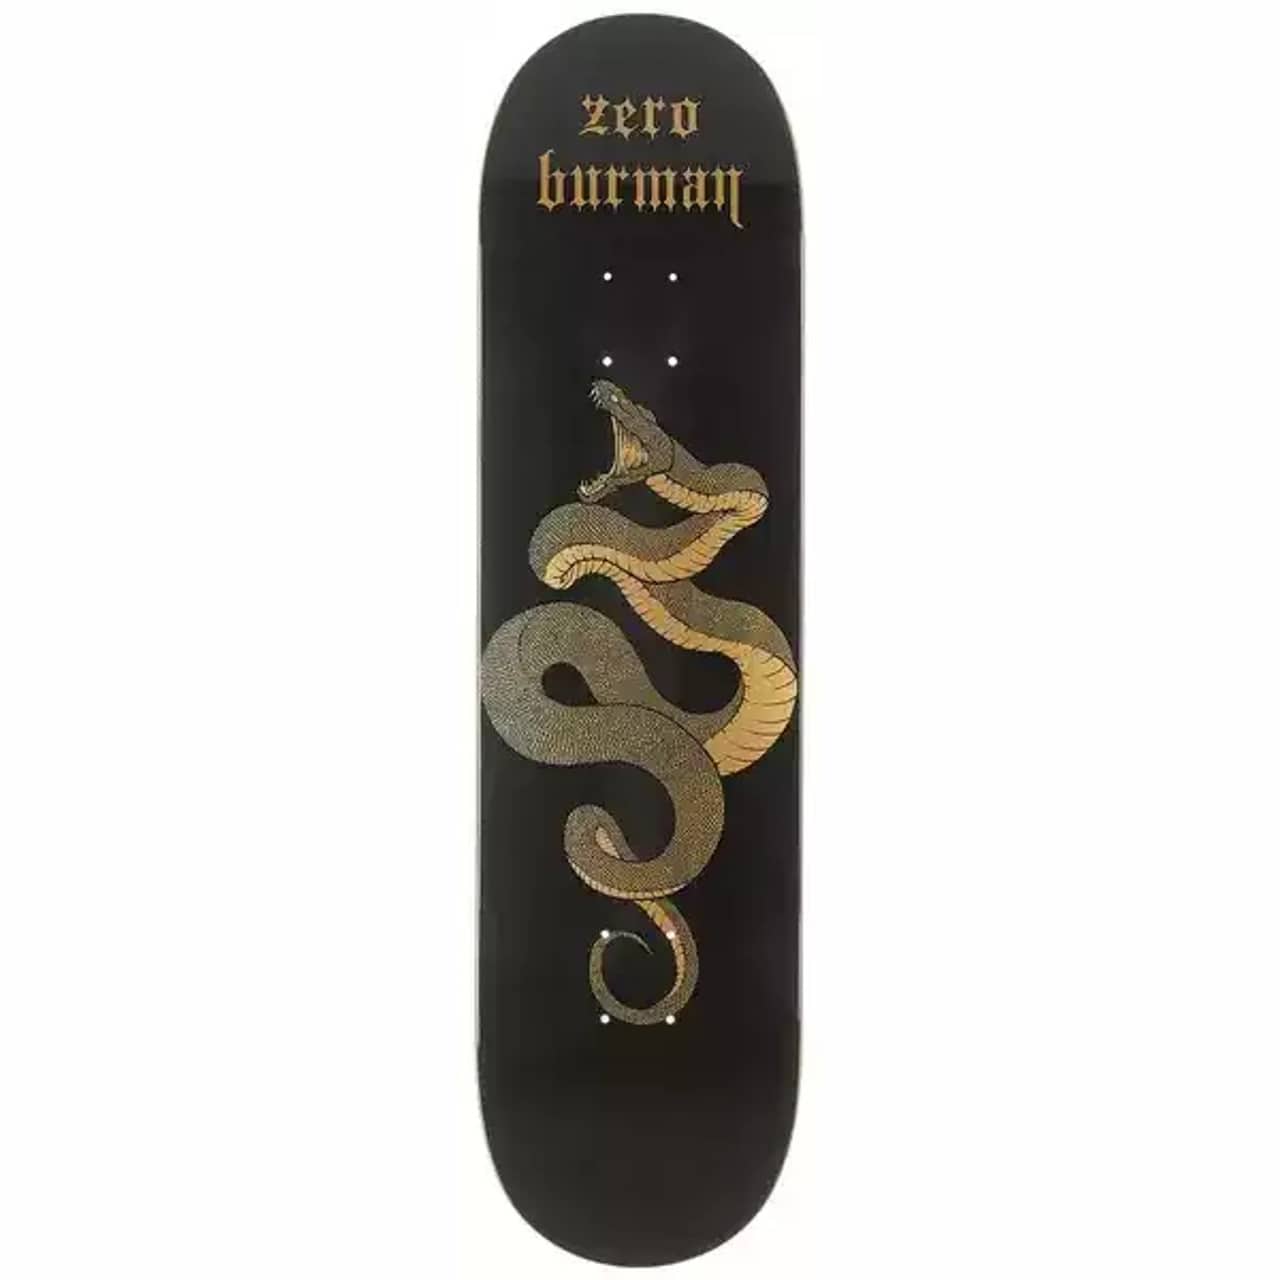 Zero Golden Snake Burman 8 25 X 31 9 Wb 14 25 deck